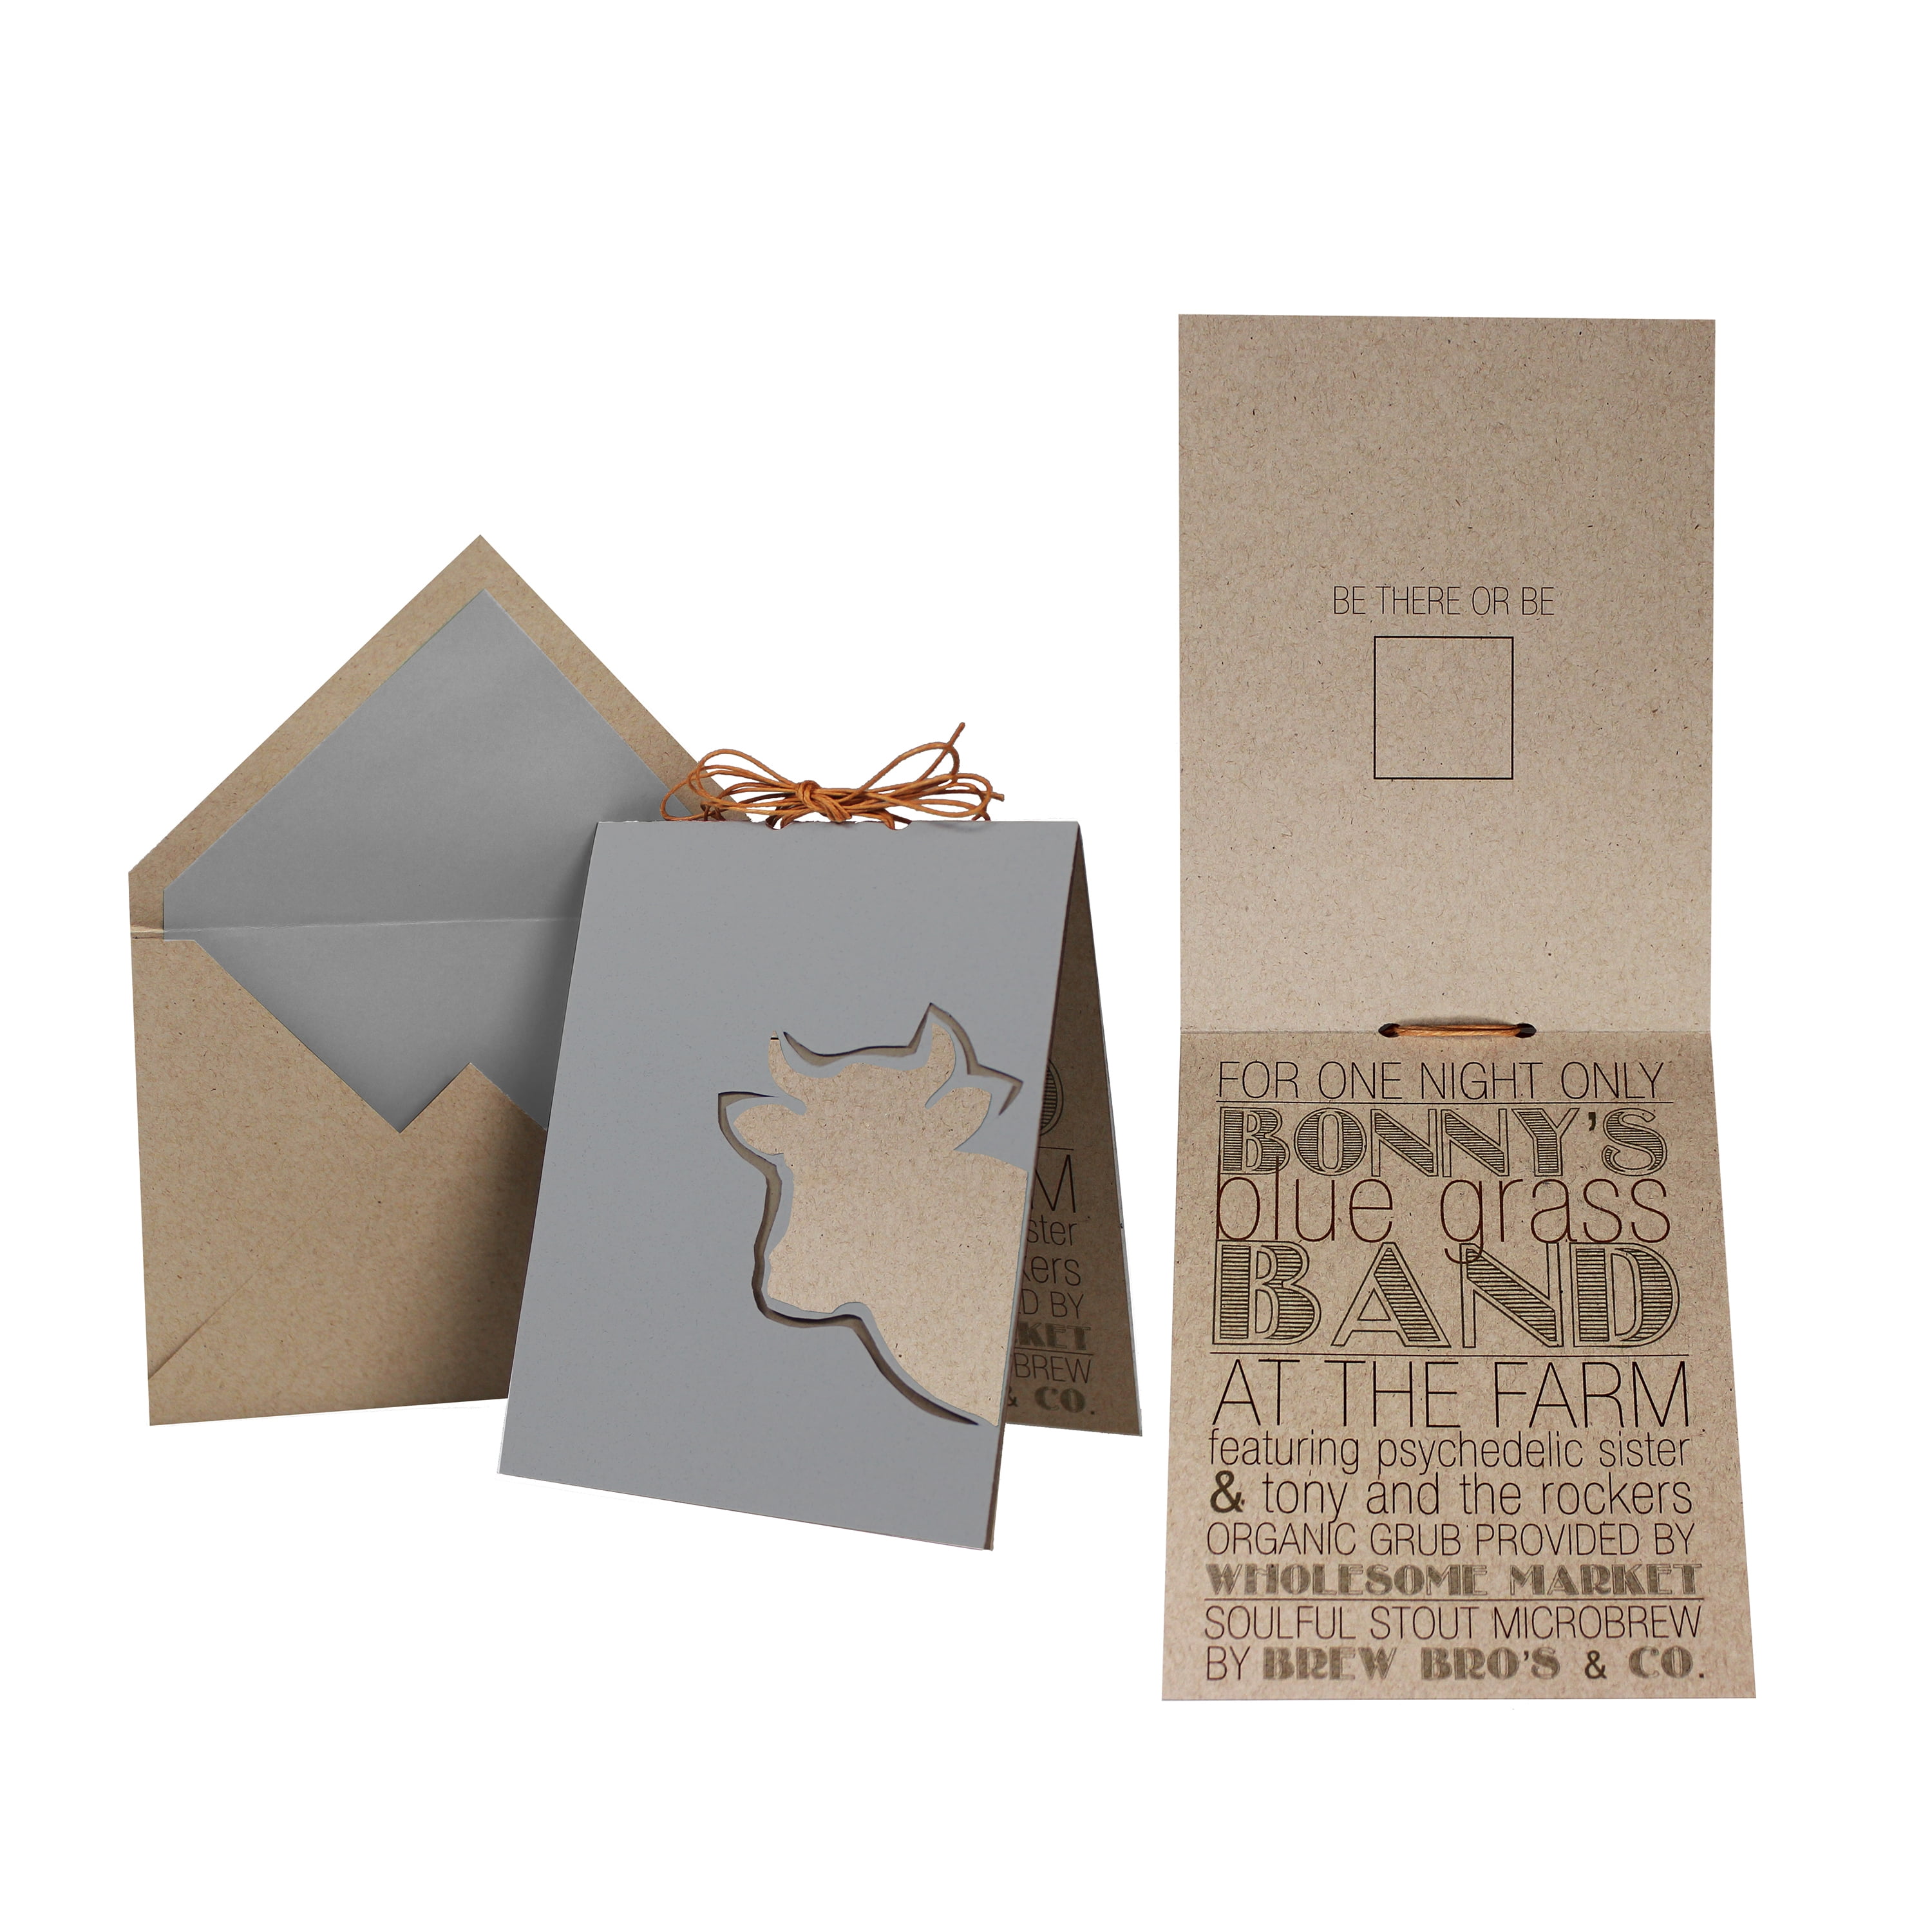 Neenah Paper Creative Collection Premium Cardstock, 65 lb, 8.5 x 11, Cream,  50/Pack (91335)